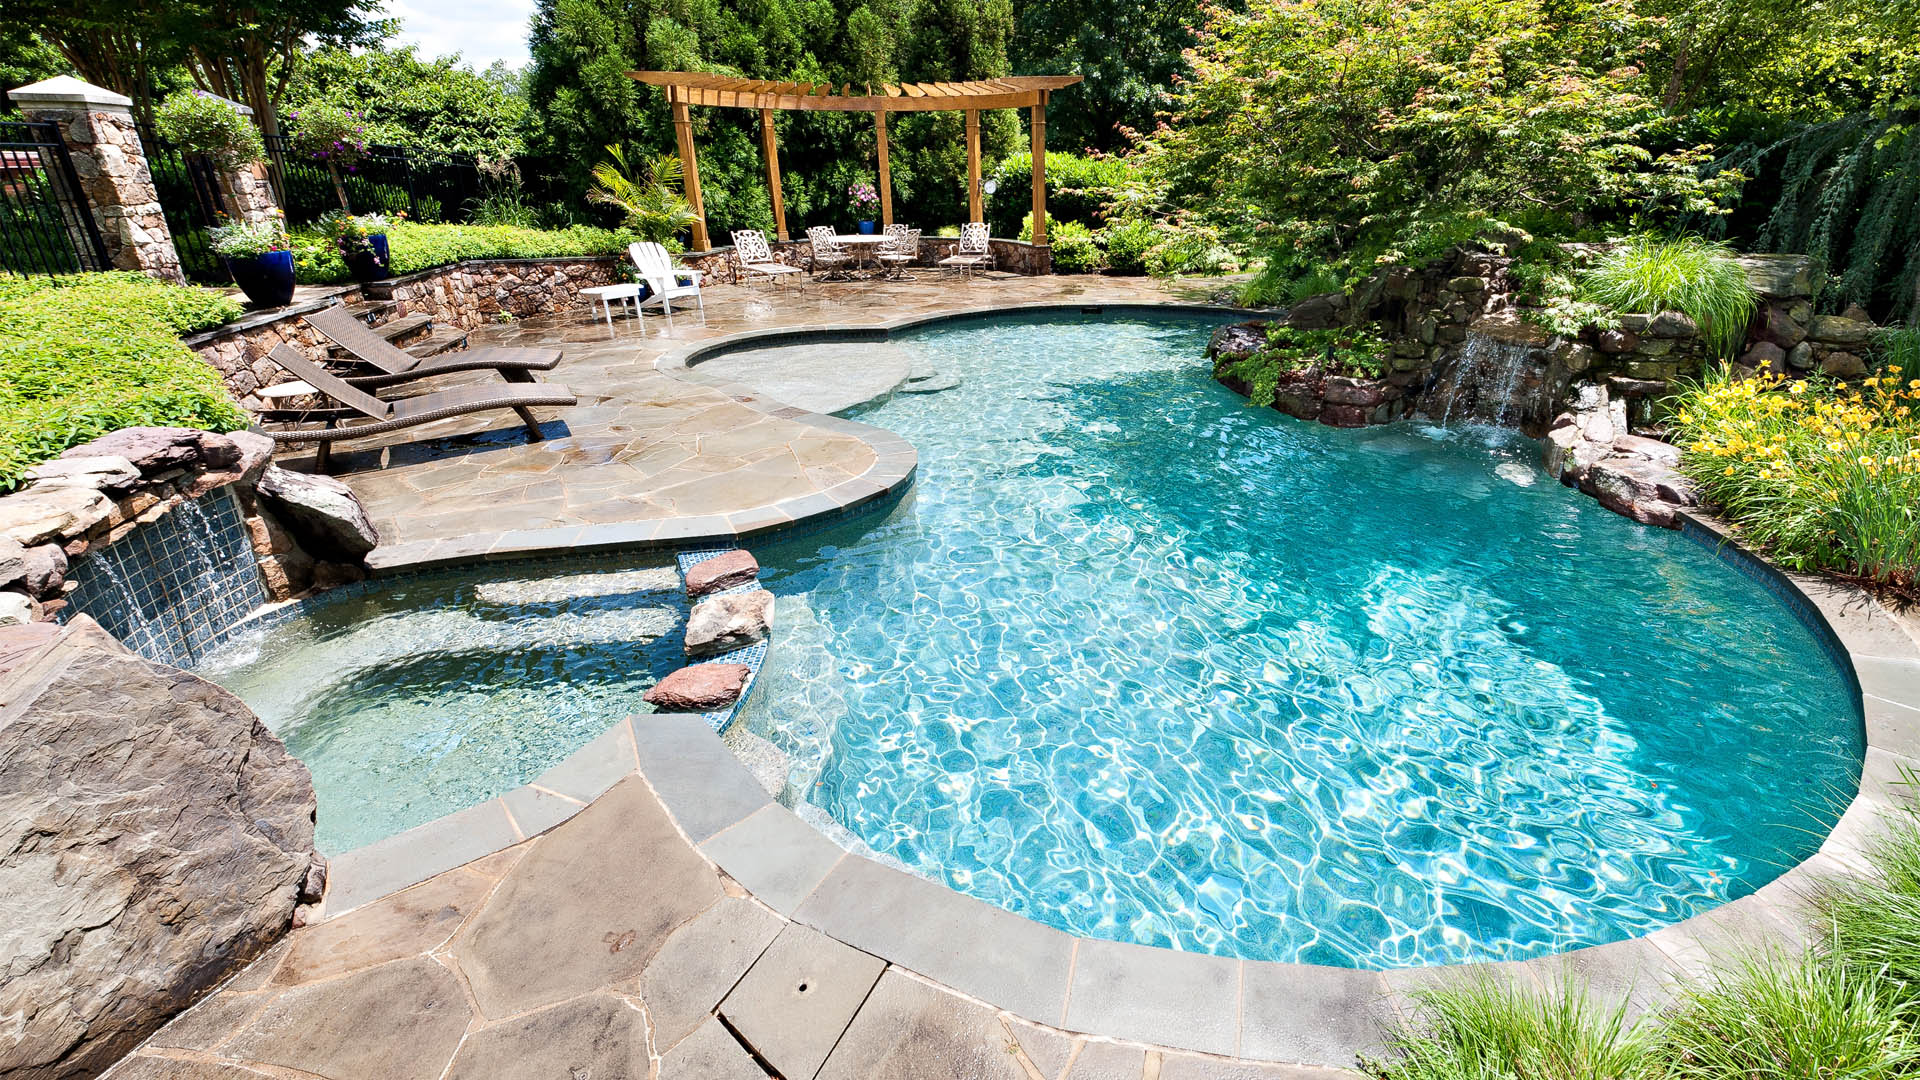 Full Size of Swimming Pool, Wonderful inground pool design ceramic tile natural stone deck small ...